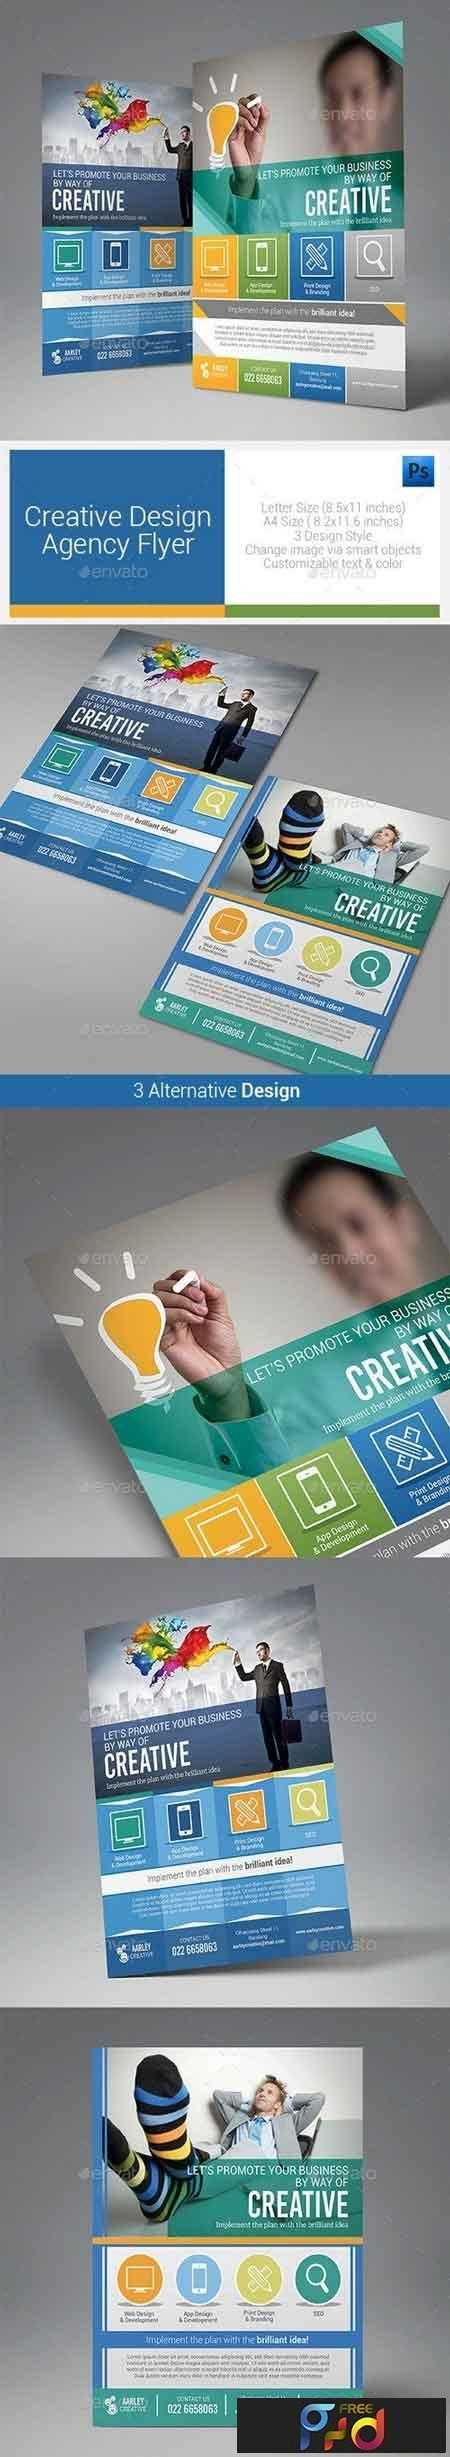 FreePsdVn.com 1809090 TEMPLATE creative design agency flyers 10147959